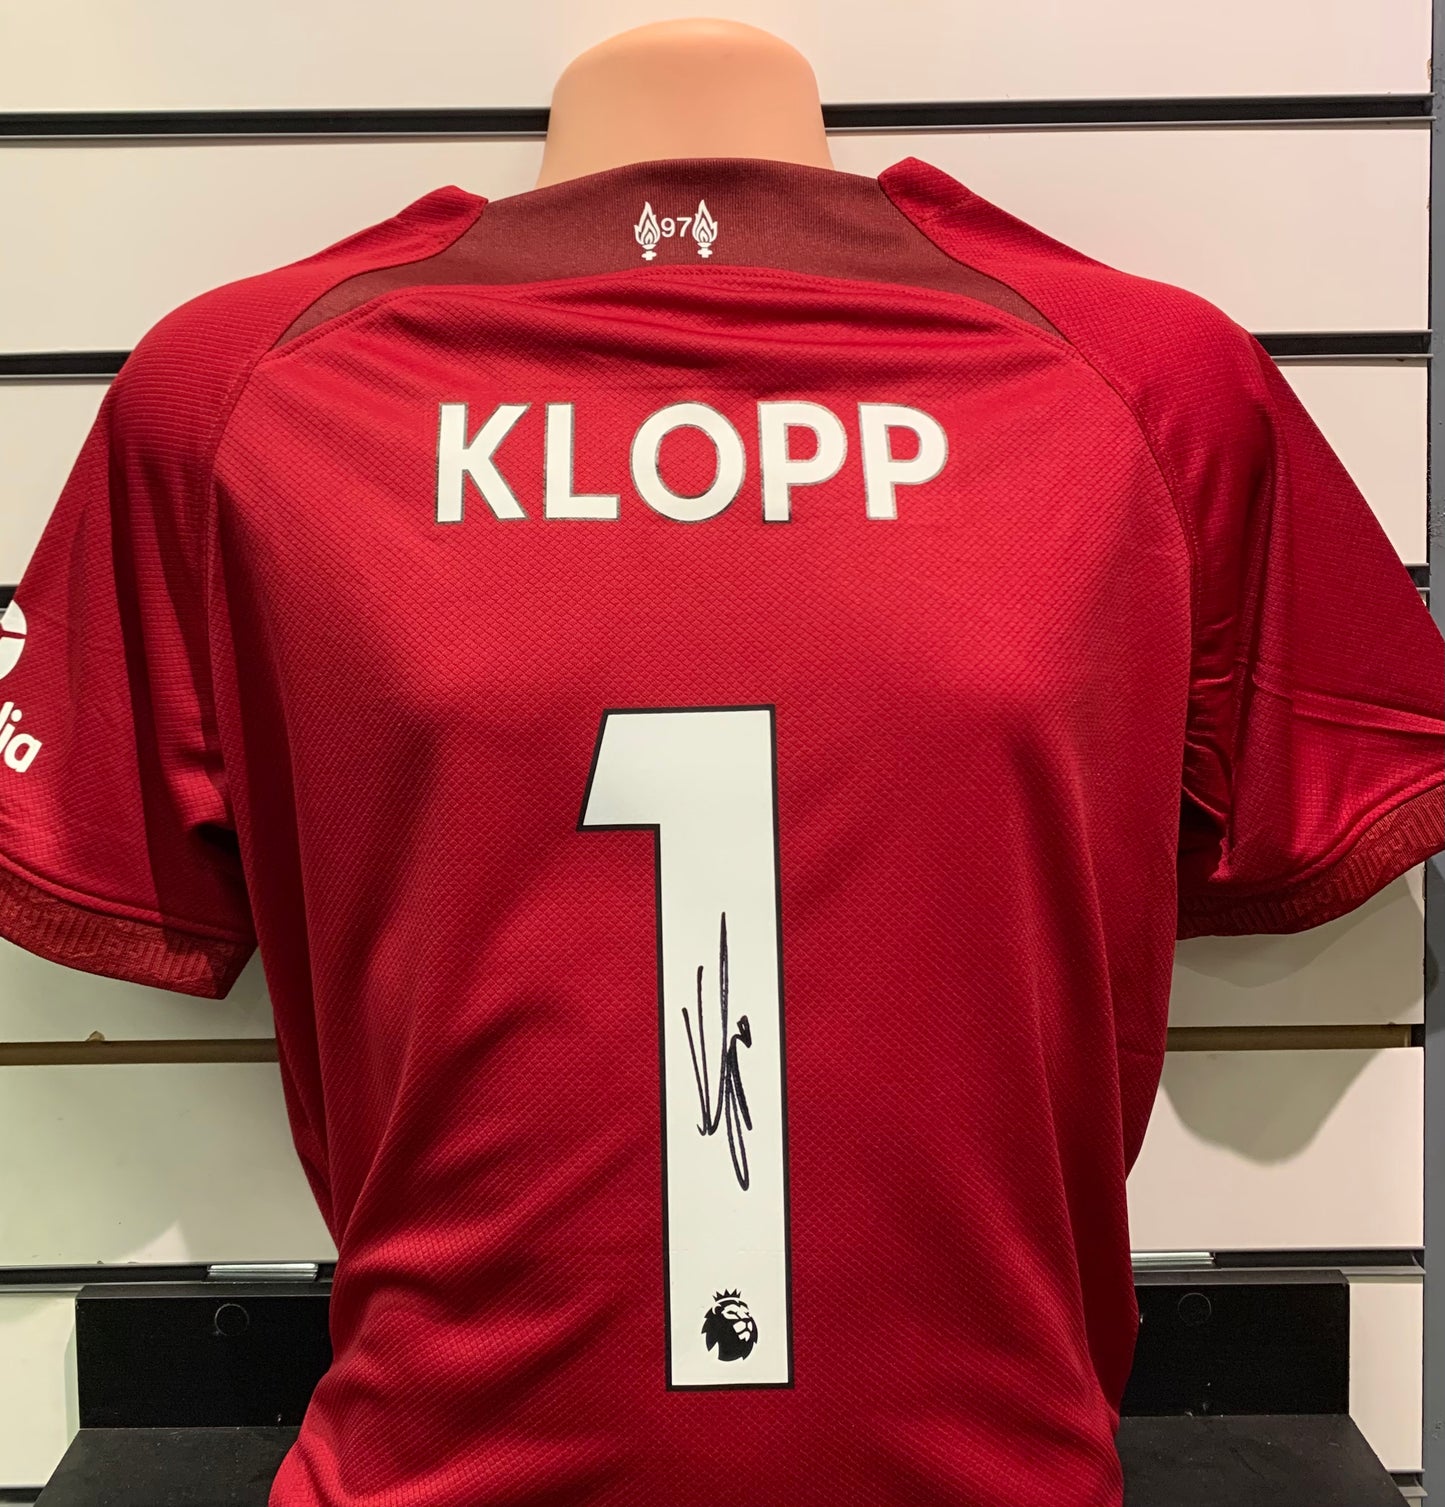 Jurgen Klopp - Liverpool signed replica shirt - LFC, Liverpool memorabilia, gift, (UNFRAMED)